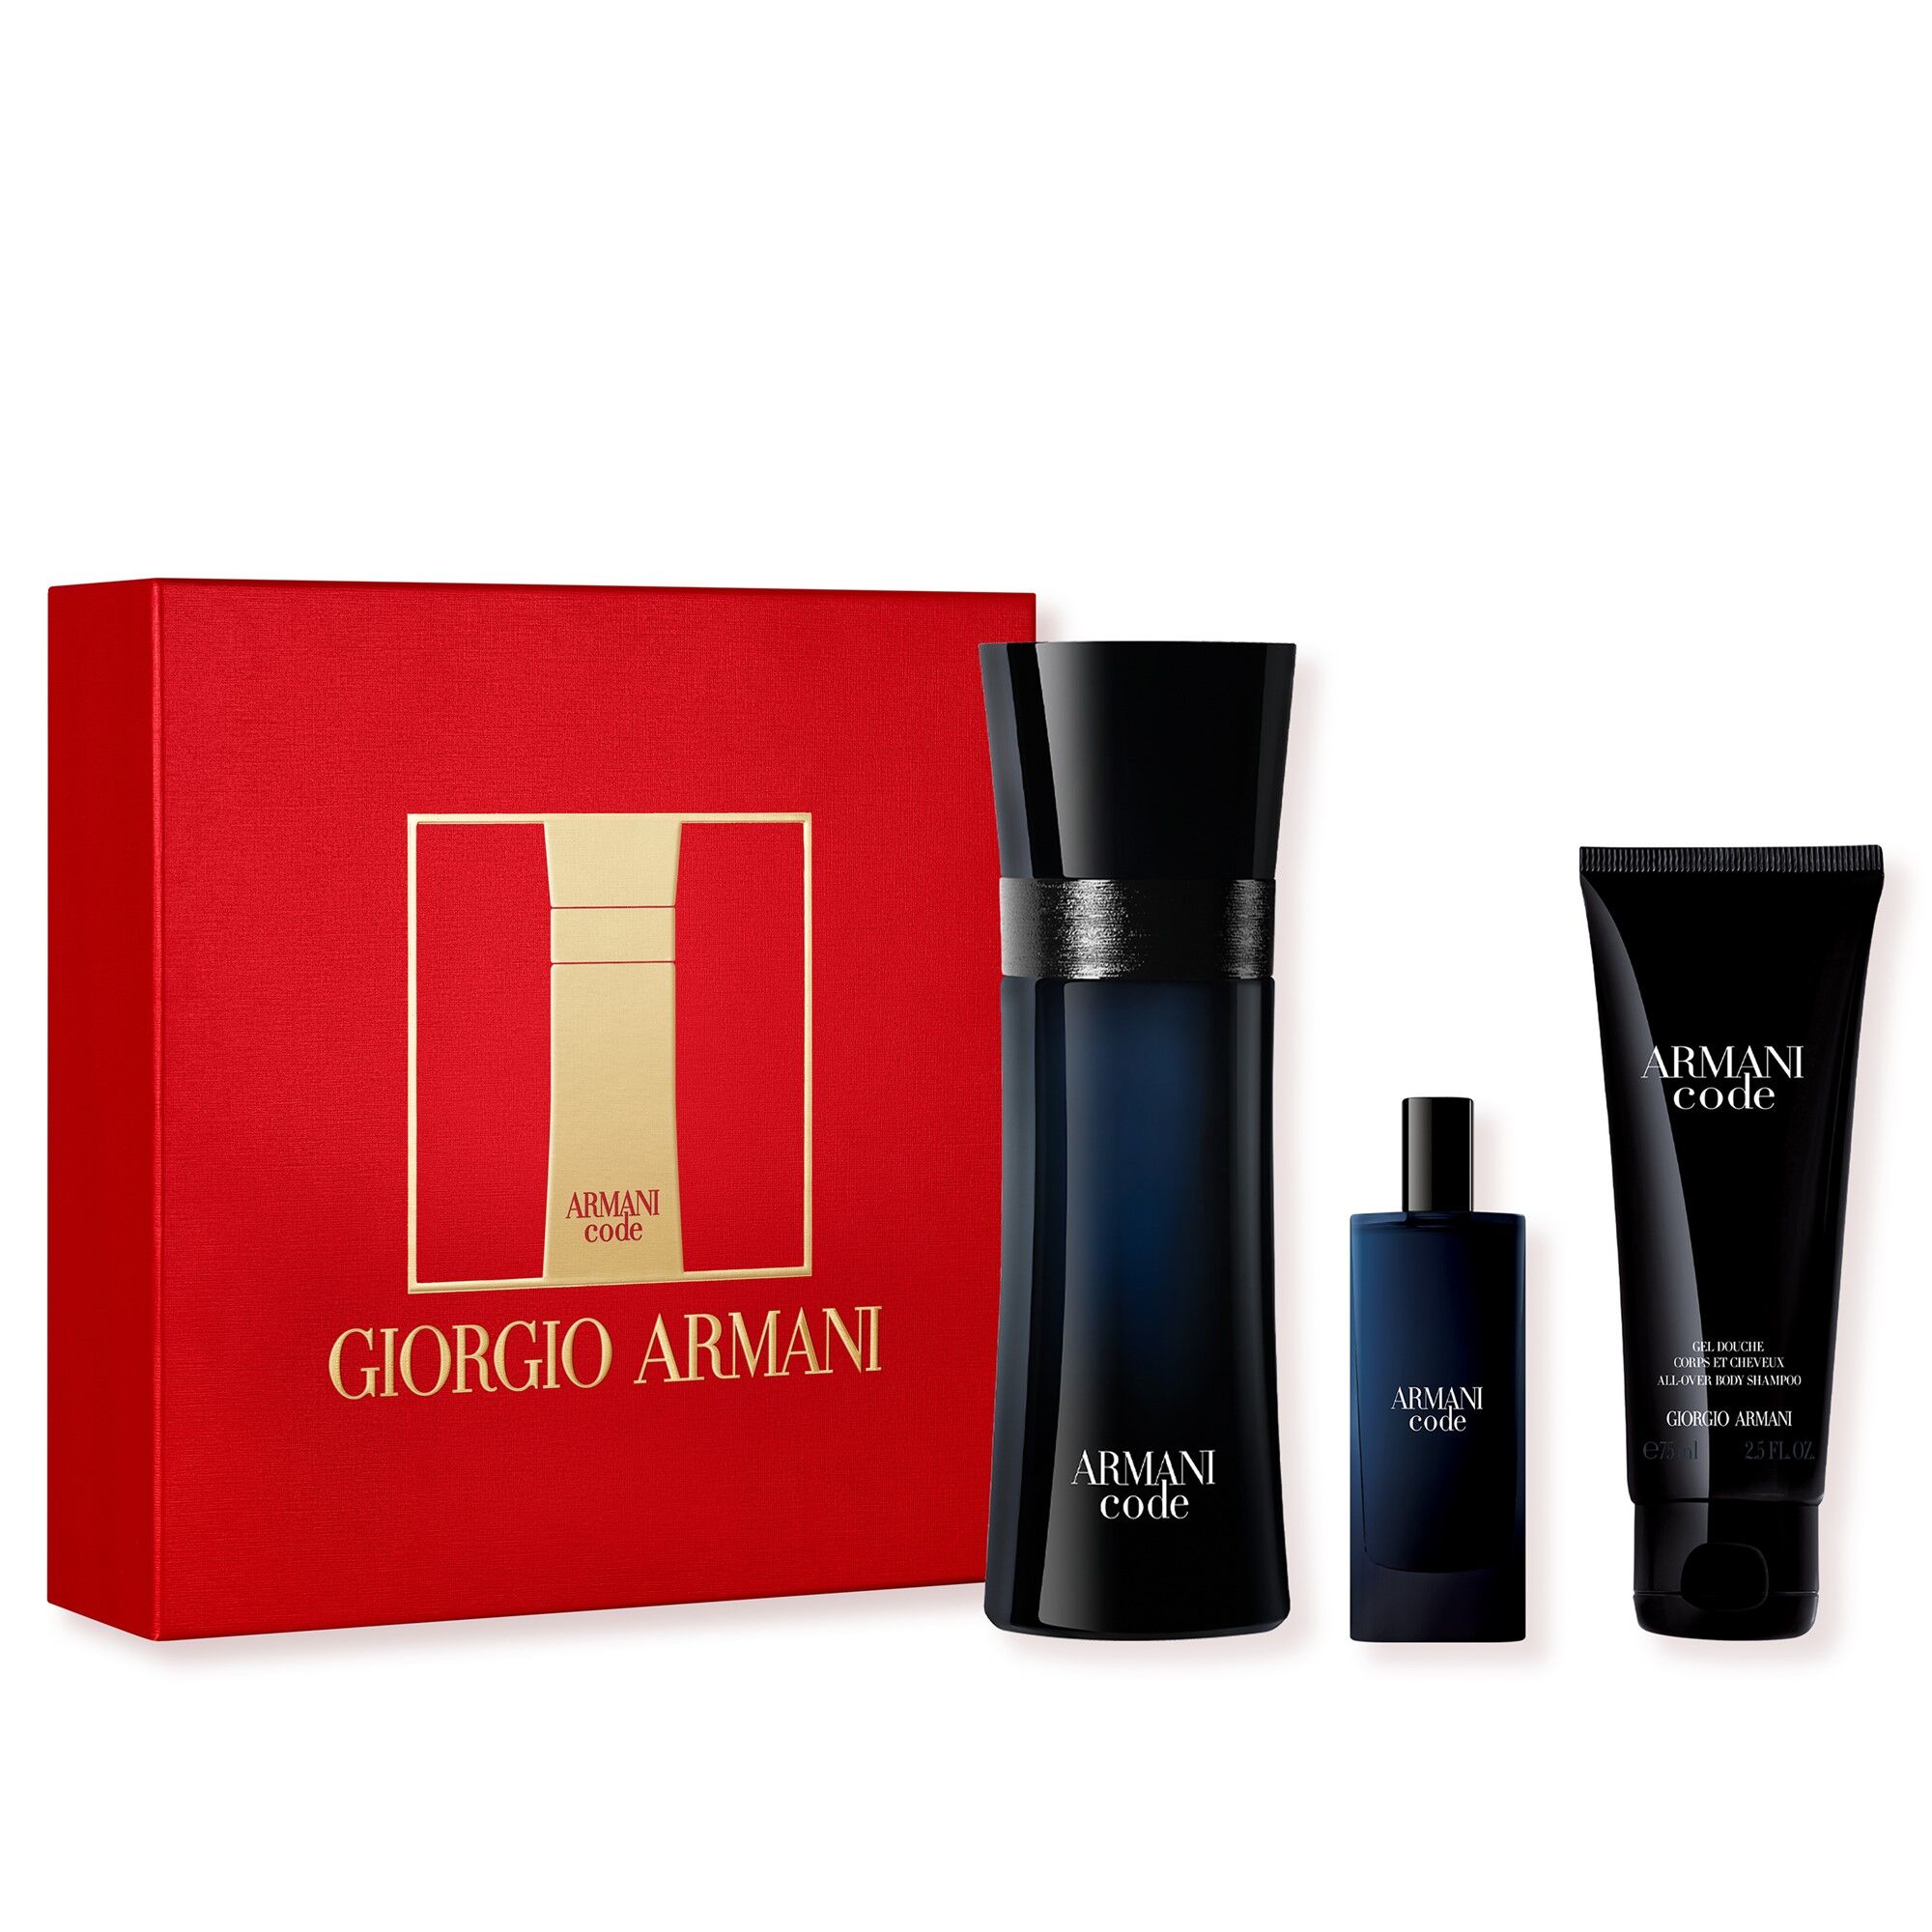 Giorgio Armani Gift Set Armani Code 75 mL + EDT 15 mL + Shower Gel 75 mL